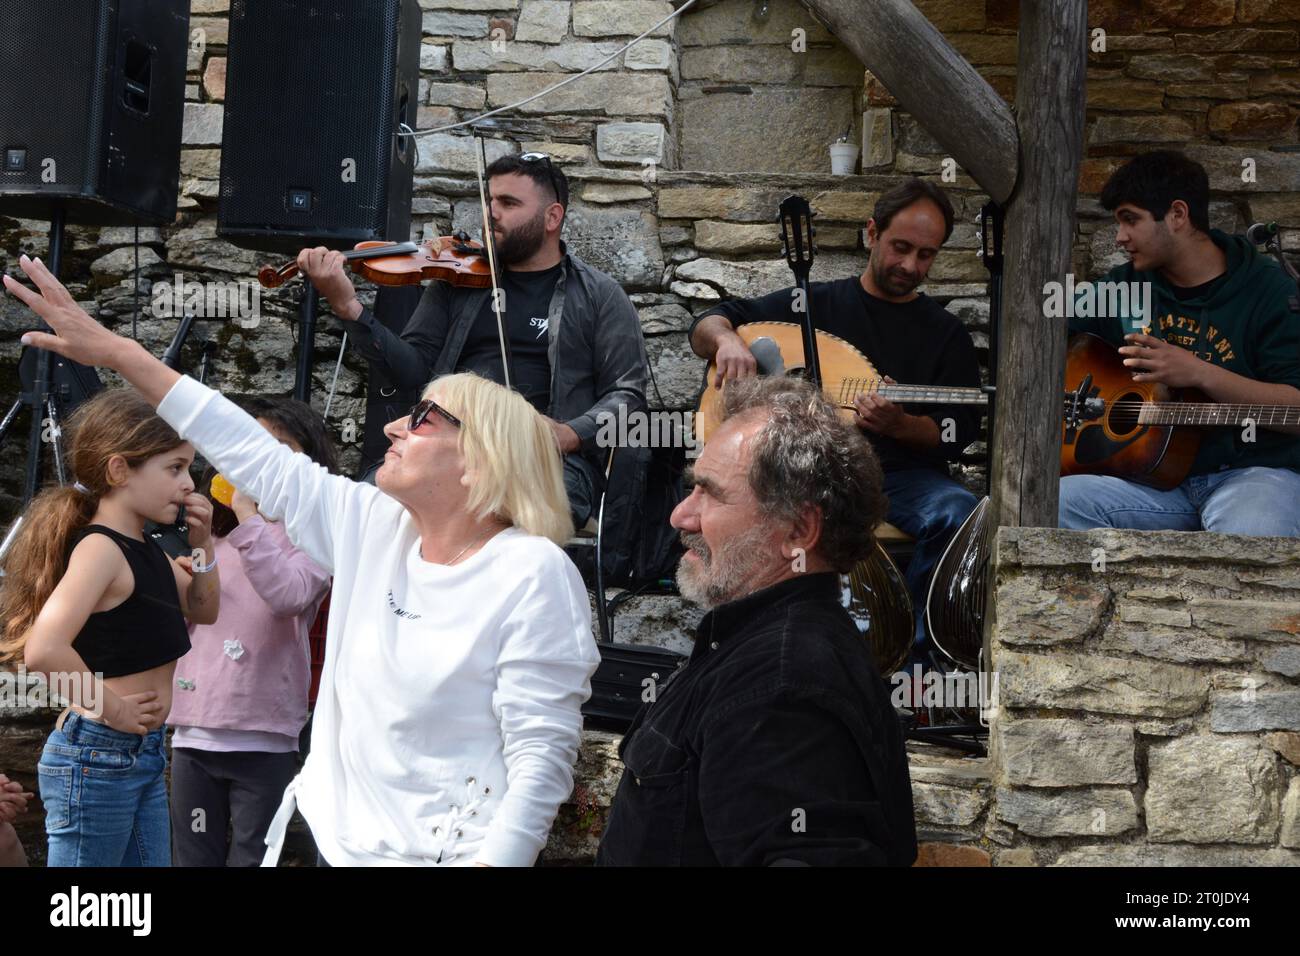 Greek villagers and musicians in a 'blue zone' at the panigiri village festival of Agios Isidoros (Saint Isidore), near Pezi, Ikaria island, Greece. Stock Photo